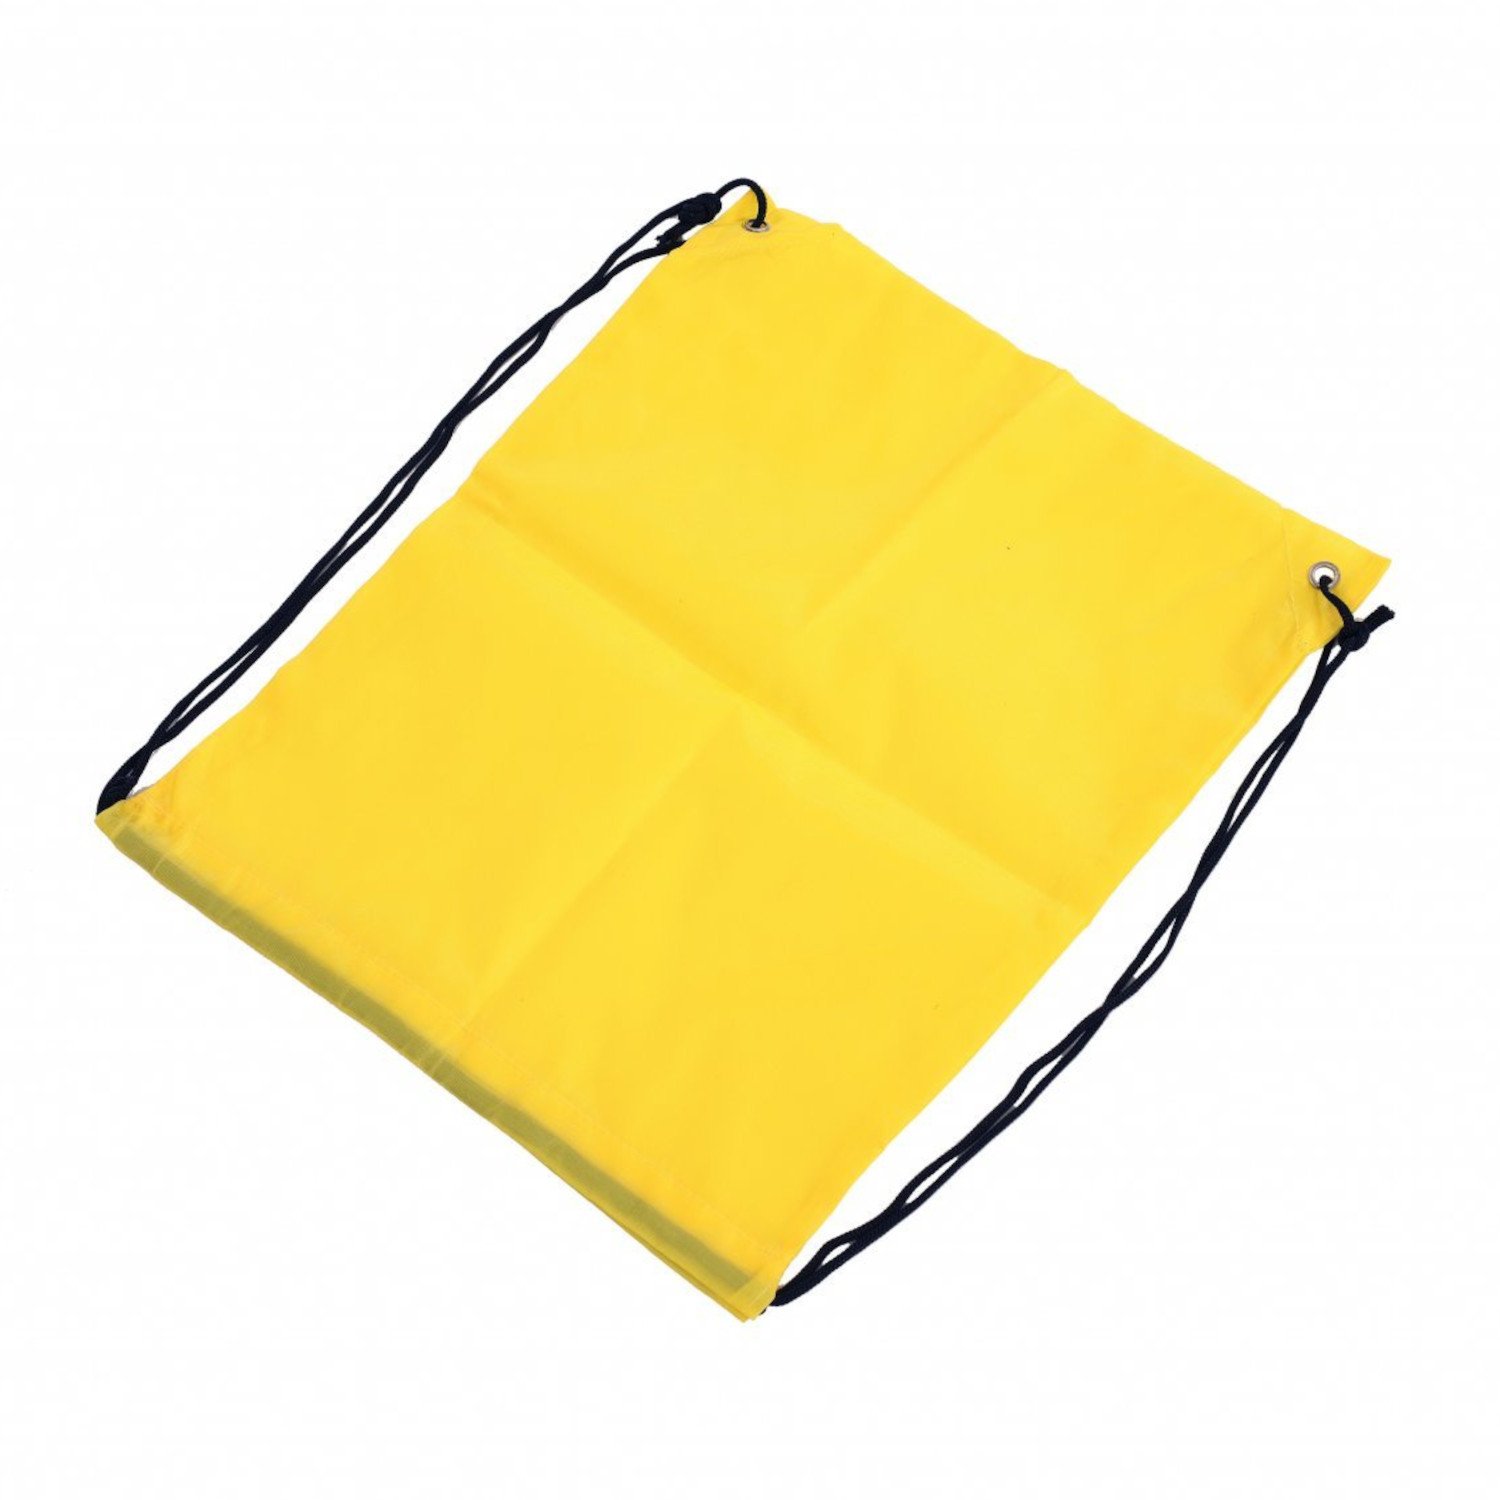 Oxford Cloth Sports PE Yellow Laundry Drawstring Bag